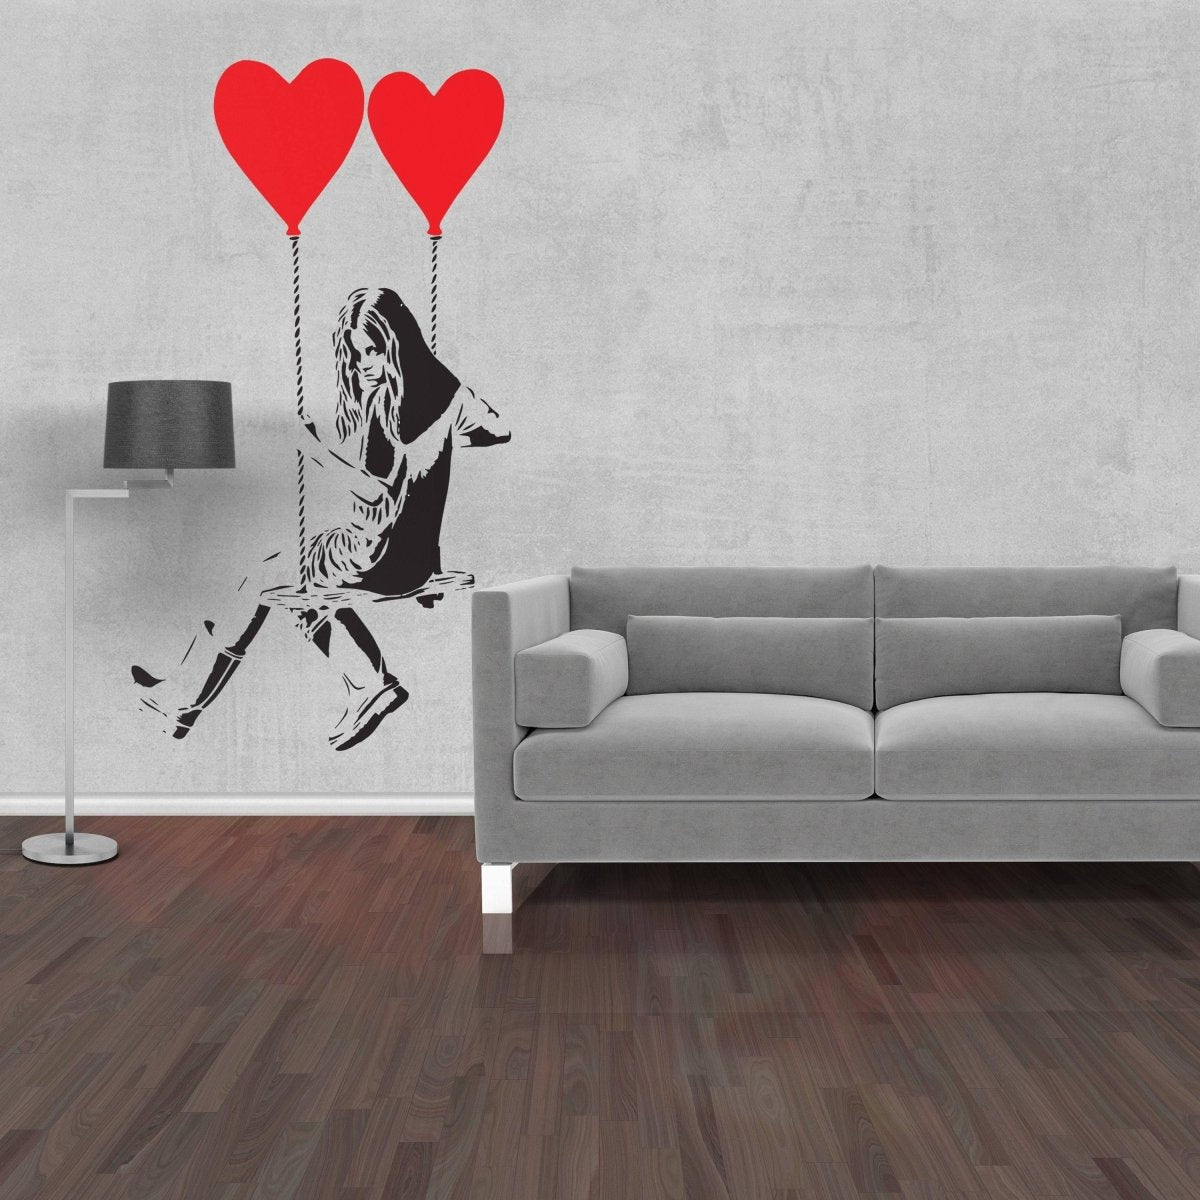 Heart Balloon Wall Sticker - Premium Vinyl Decal for Creative Spaces - Decords